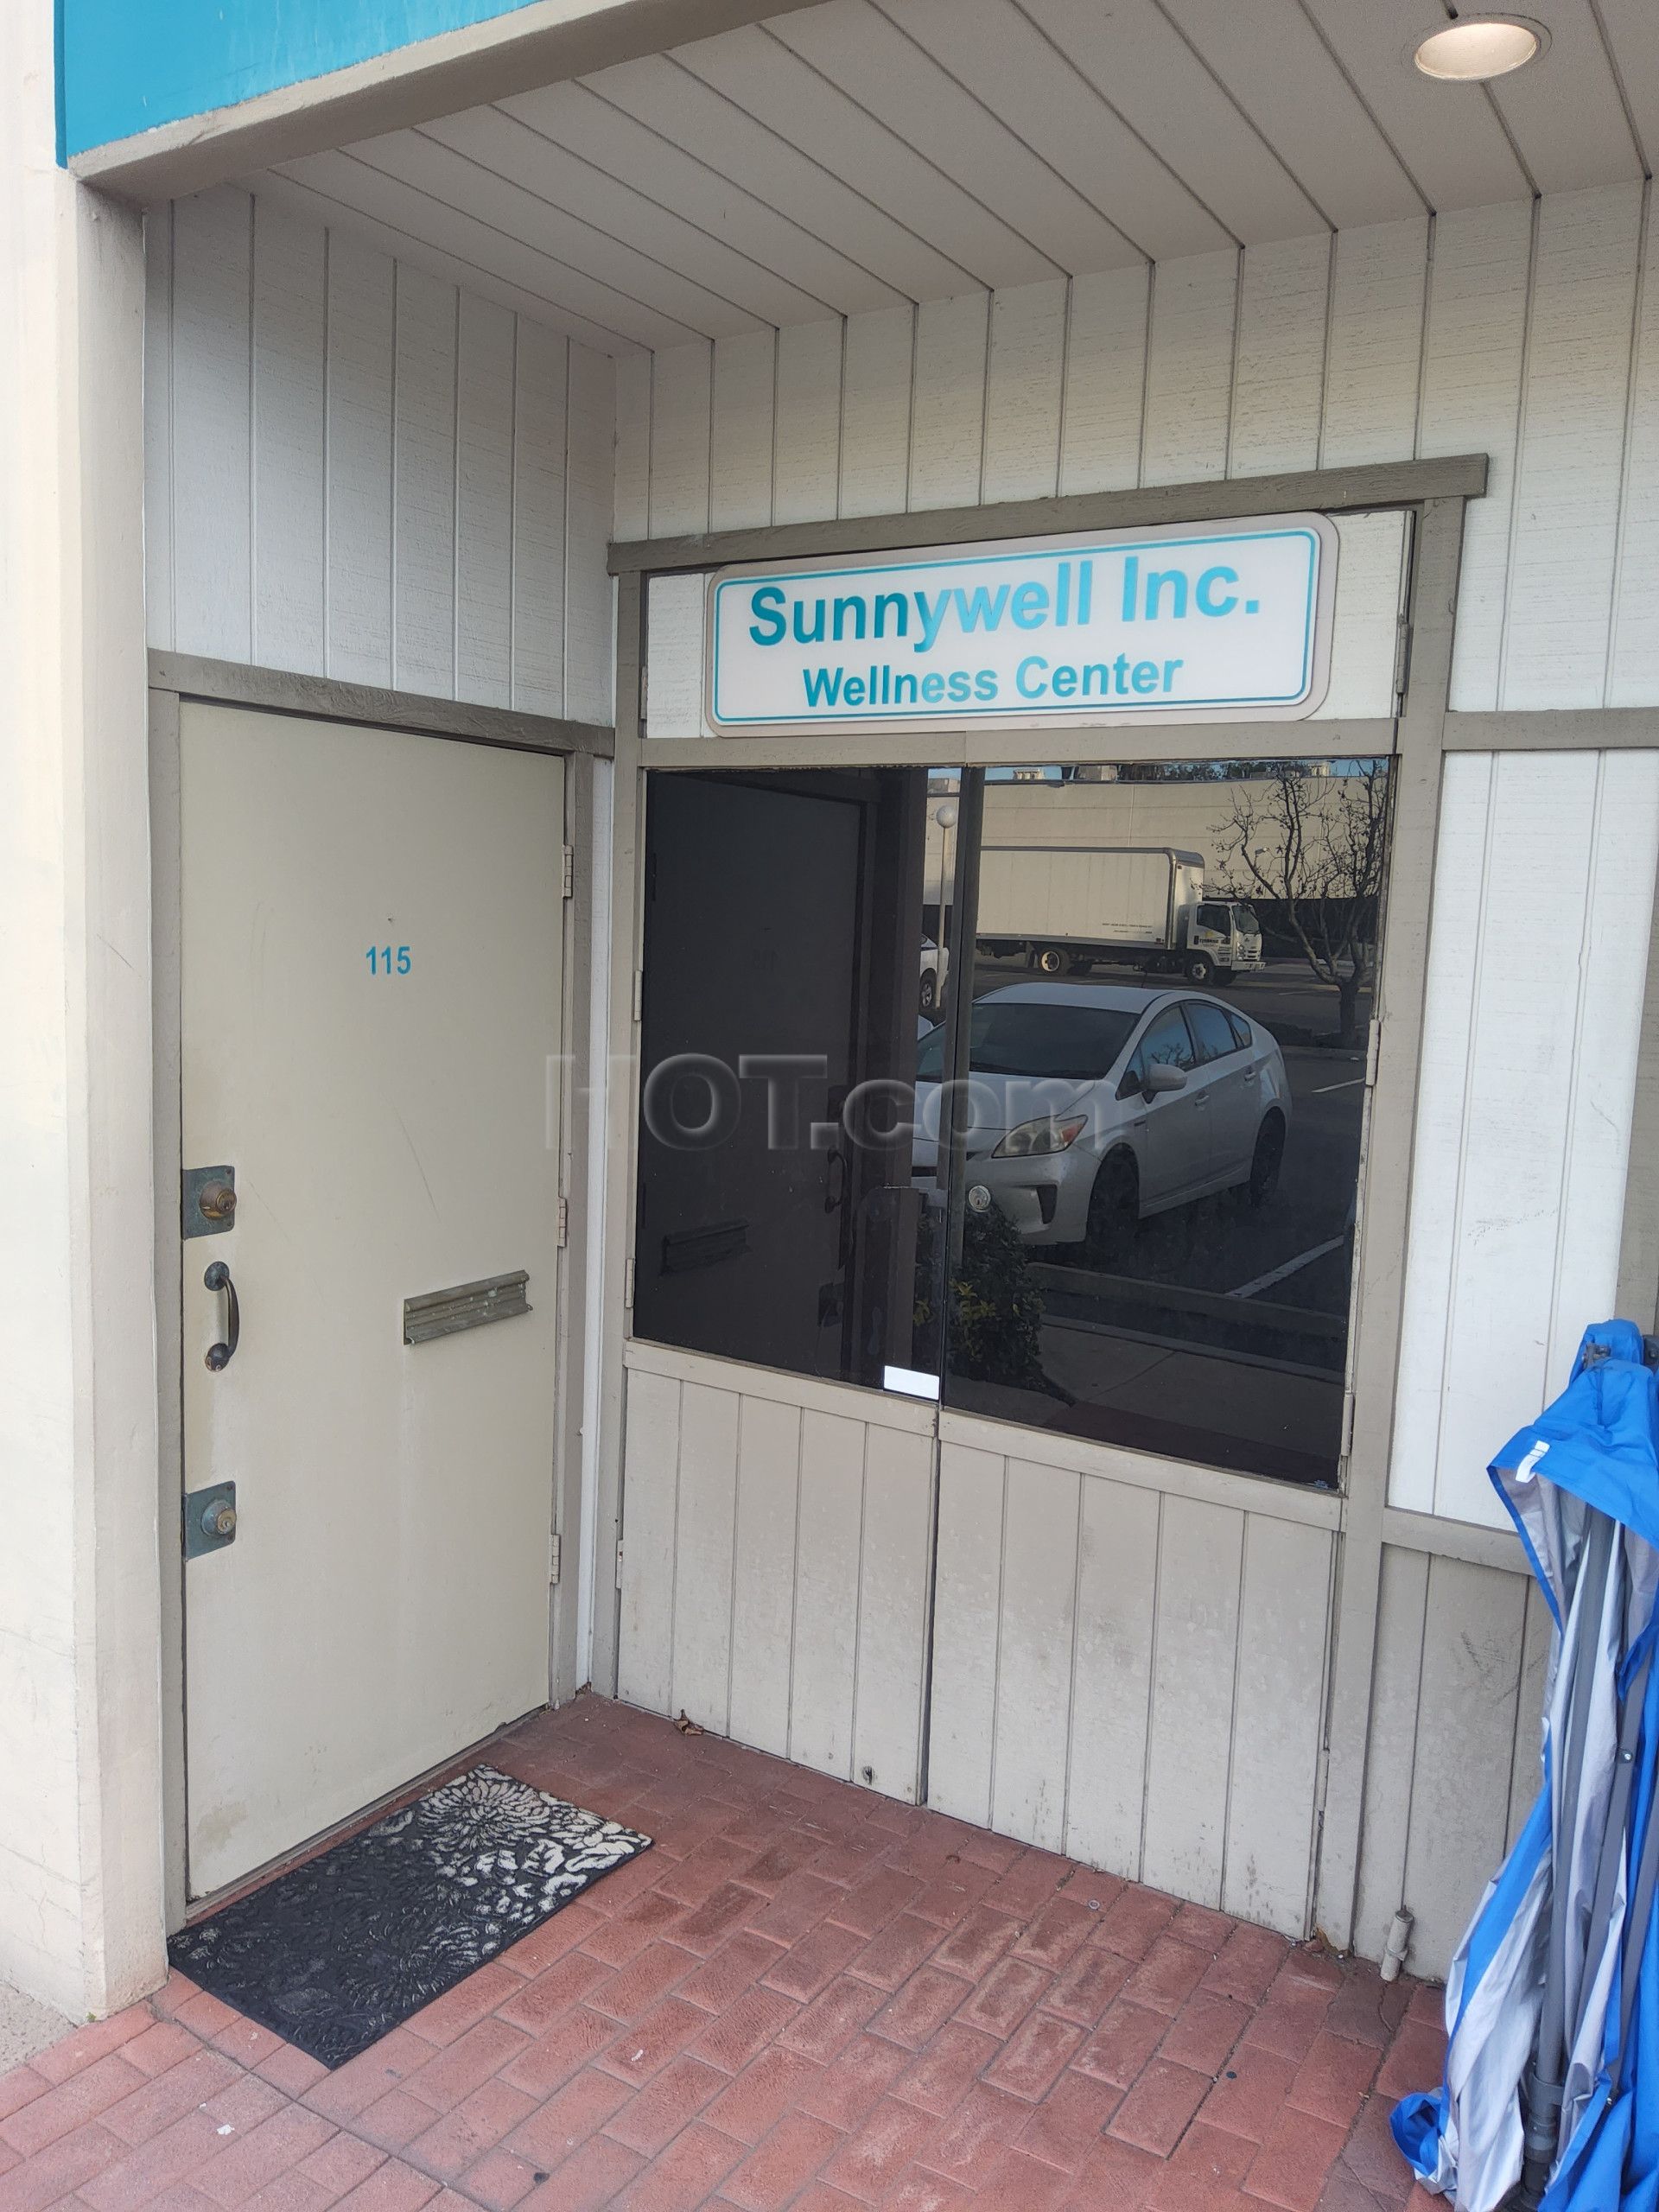 Santa Ana, California Sunnywell Wellness Center